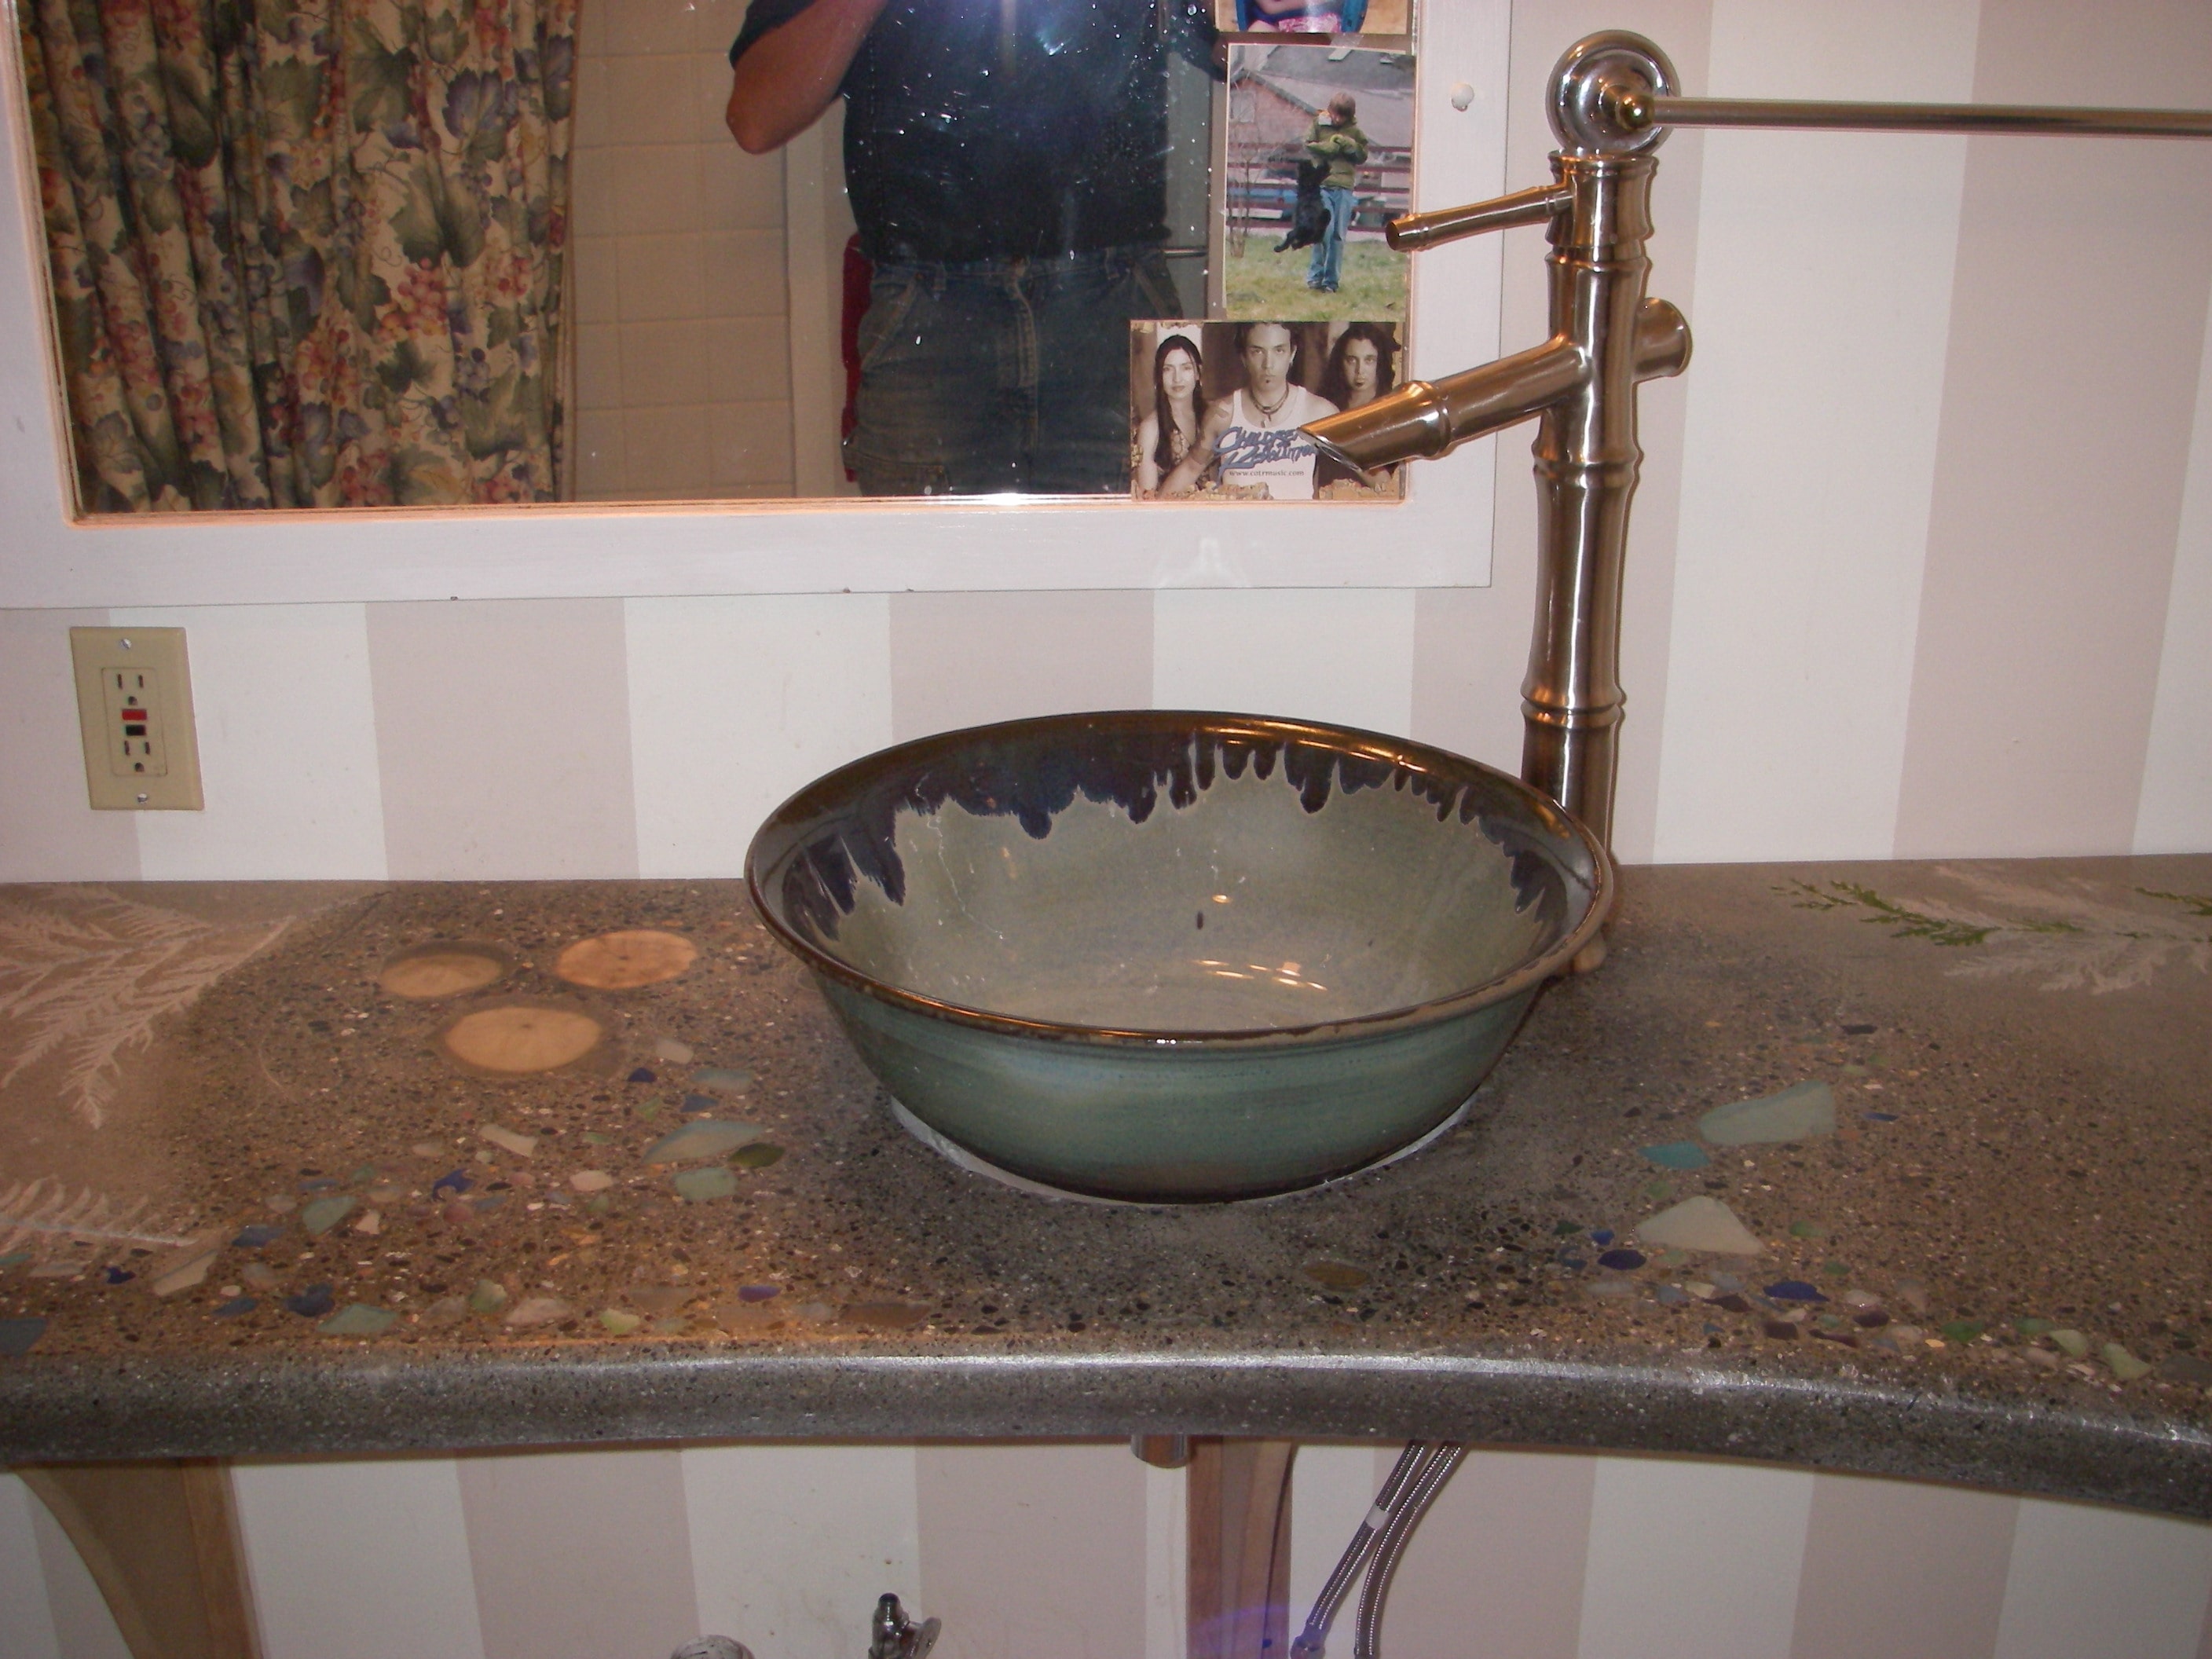 Wash basin on a countertop